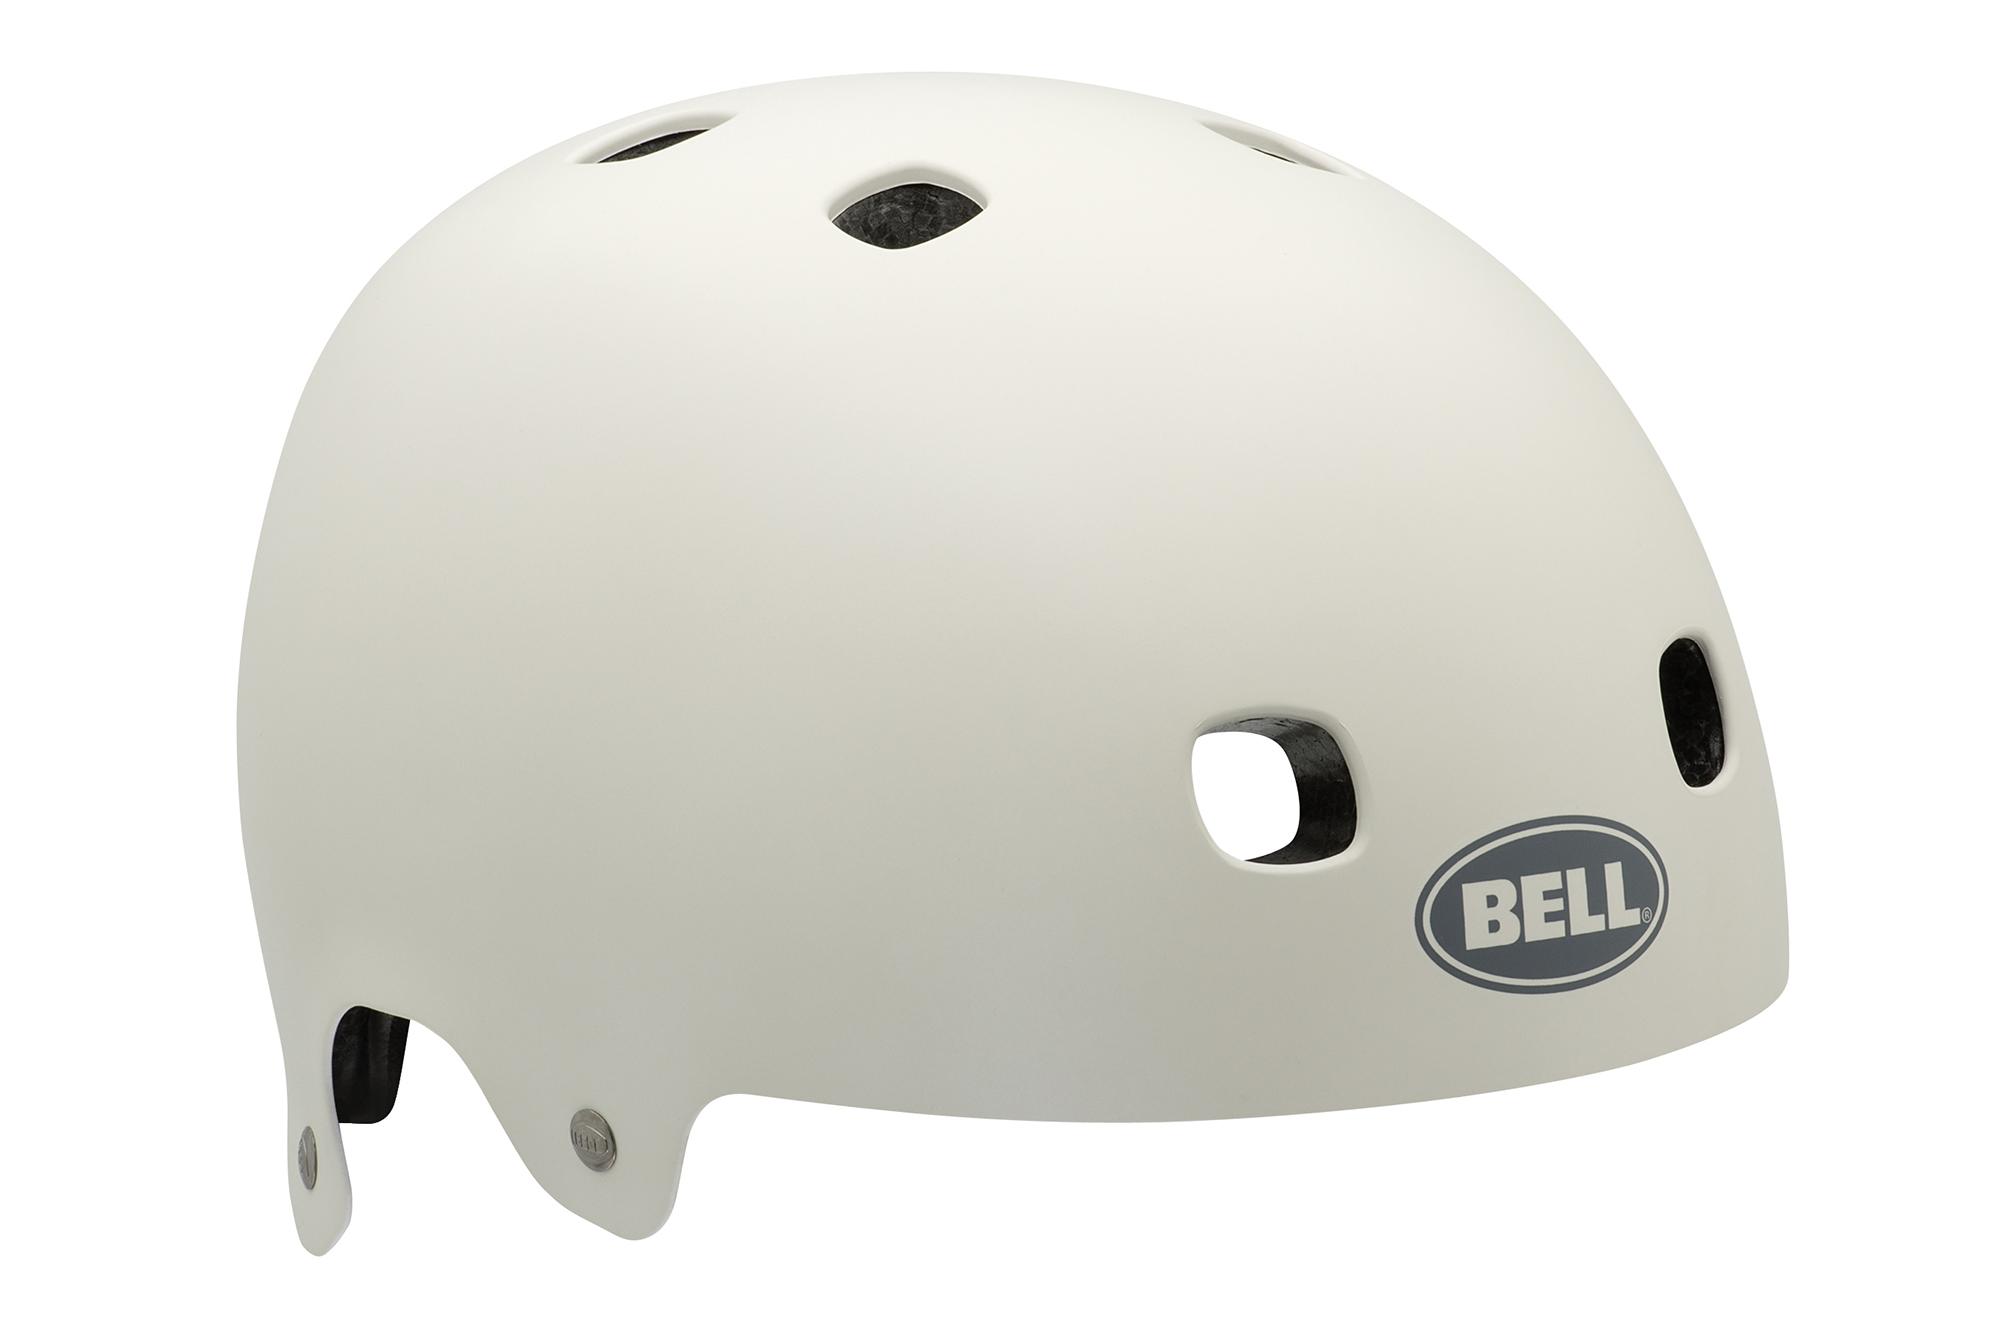 Foto Bell Segment Casco BMX blanco